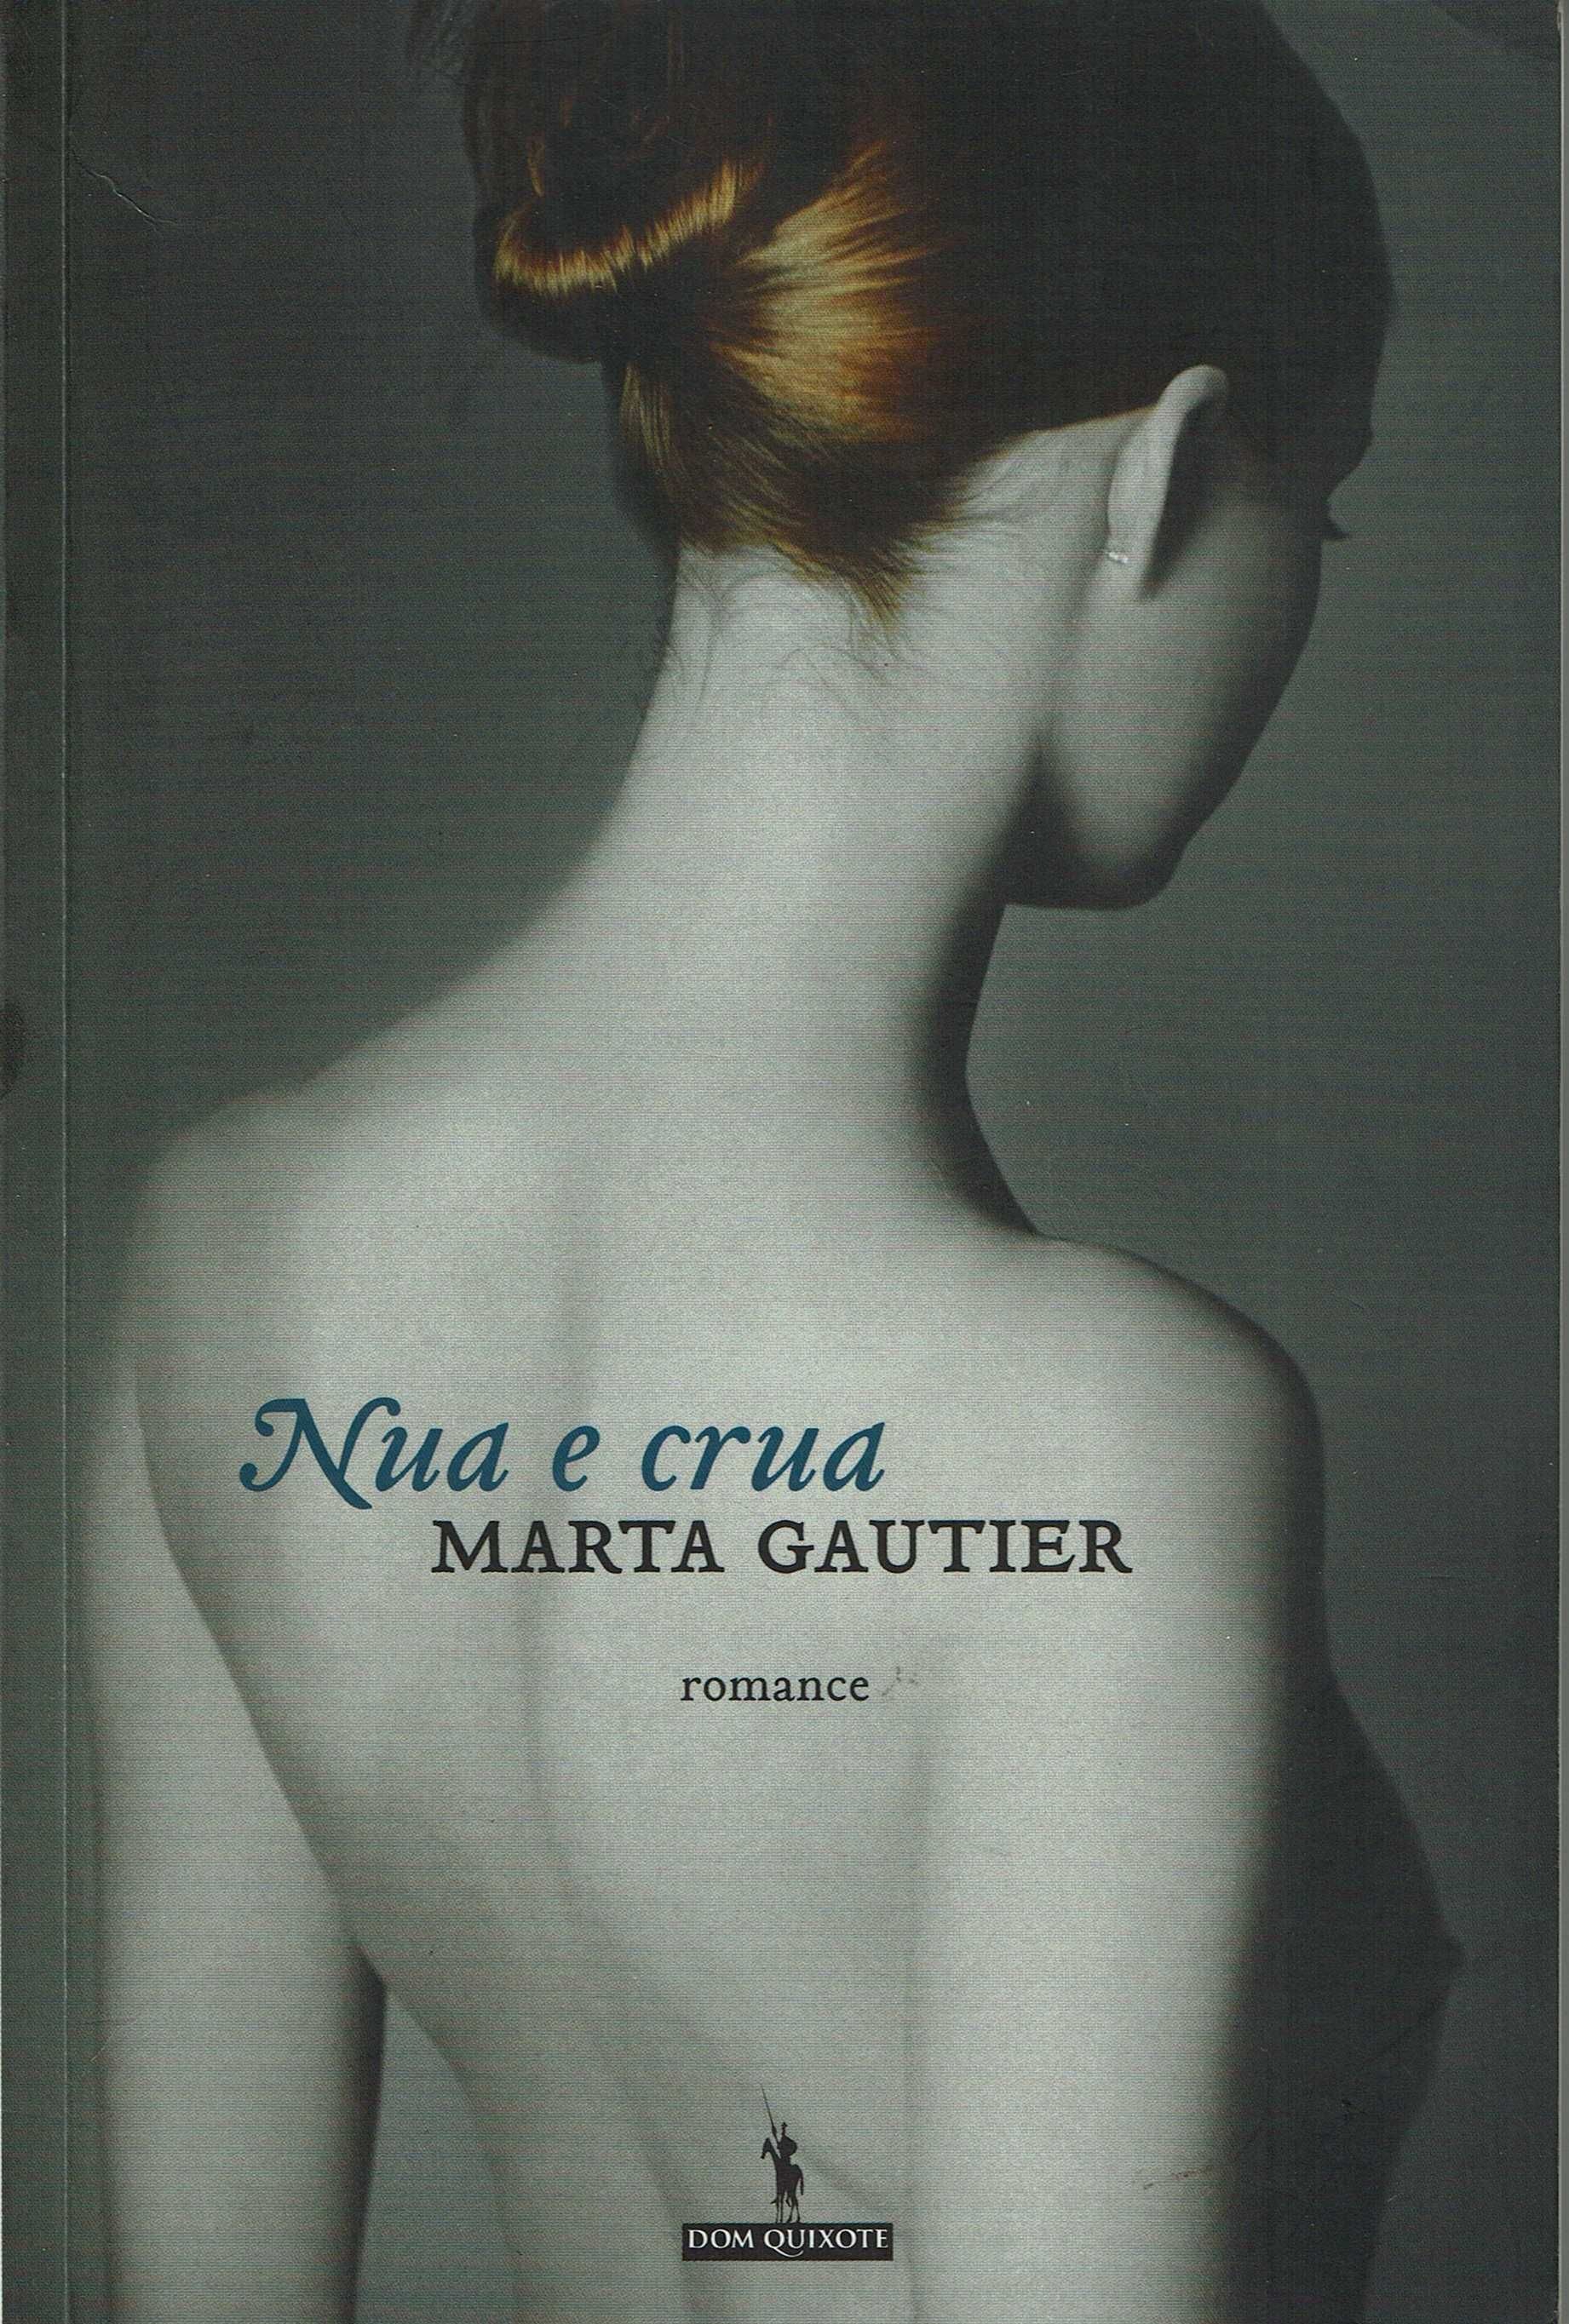 "Nua e crua" - Marta Gautier